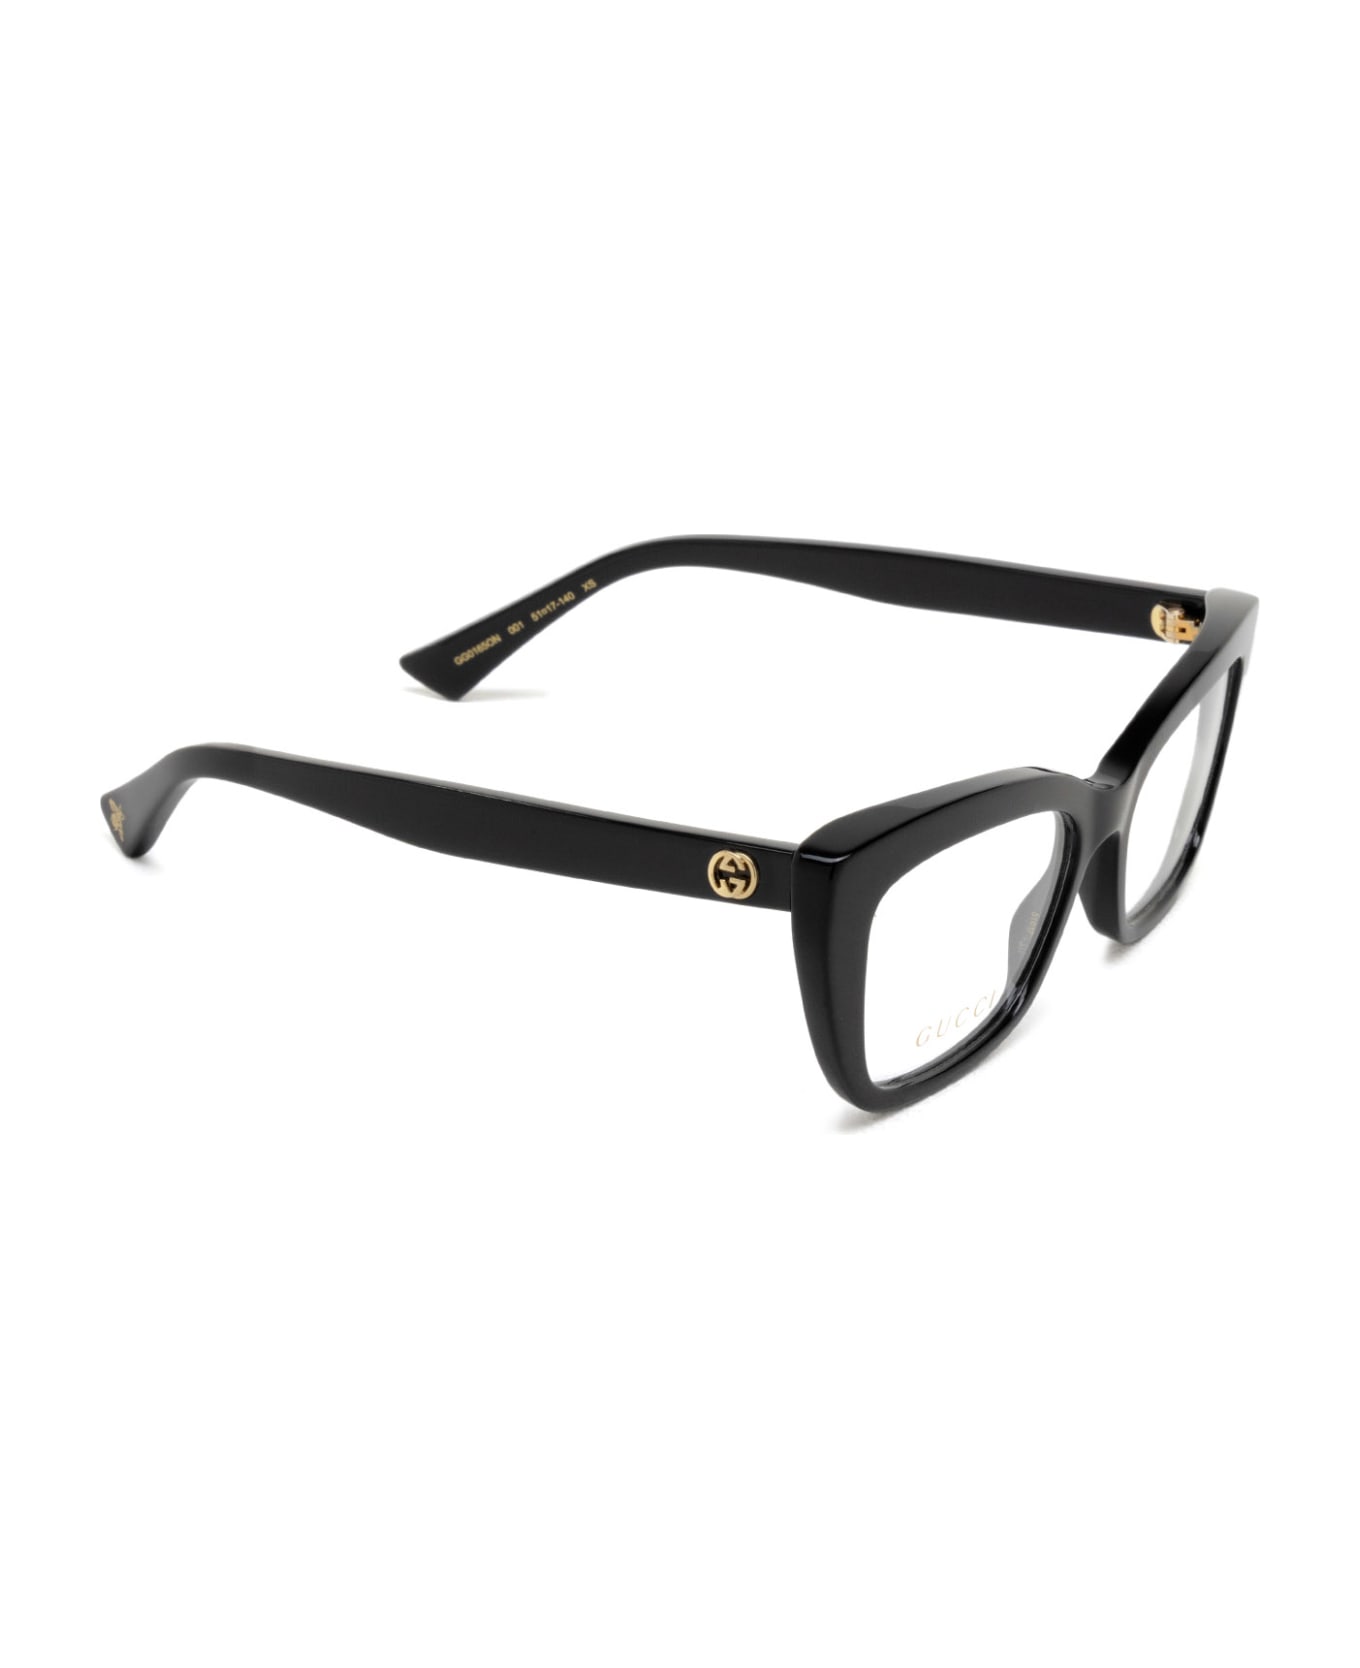 Gucci Eyewear Gg0165on Black Glasses - Black アイウェア